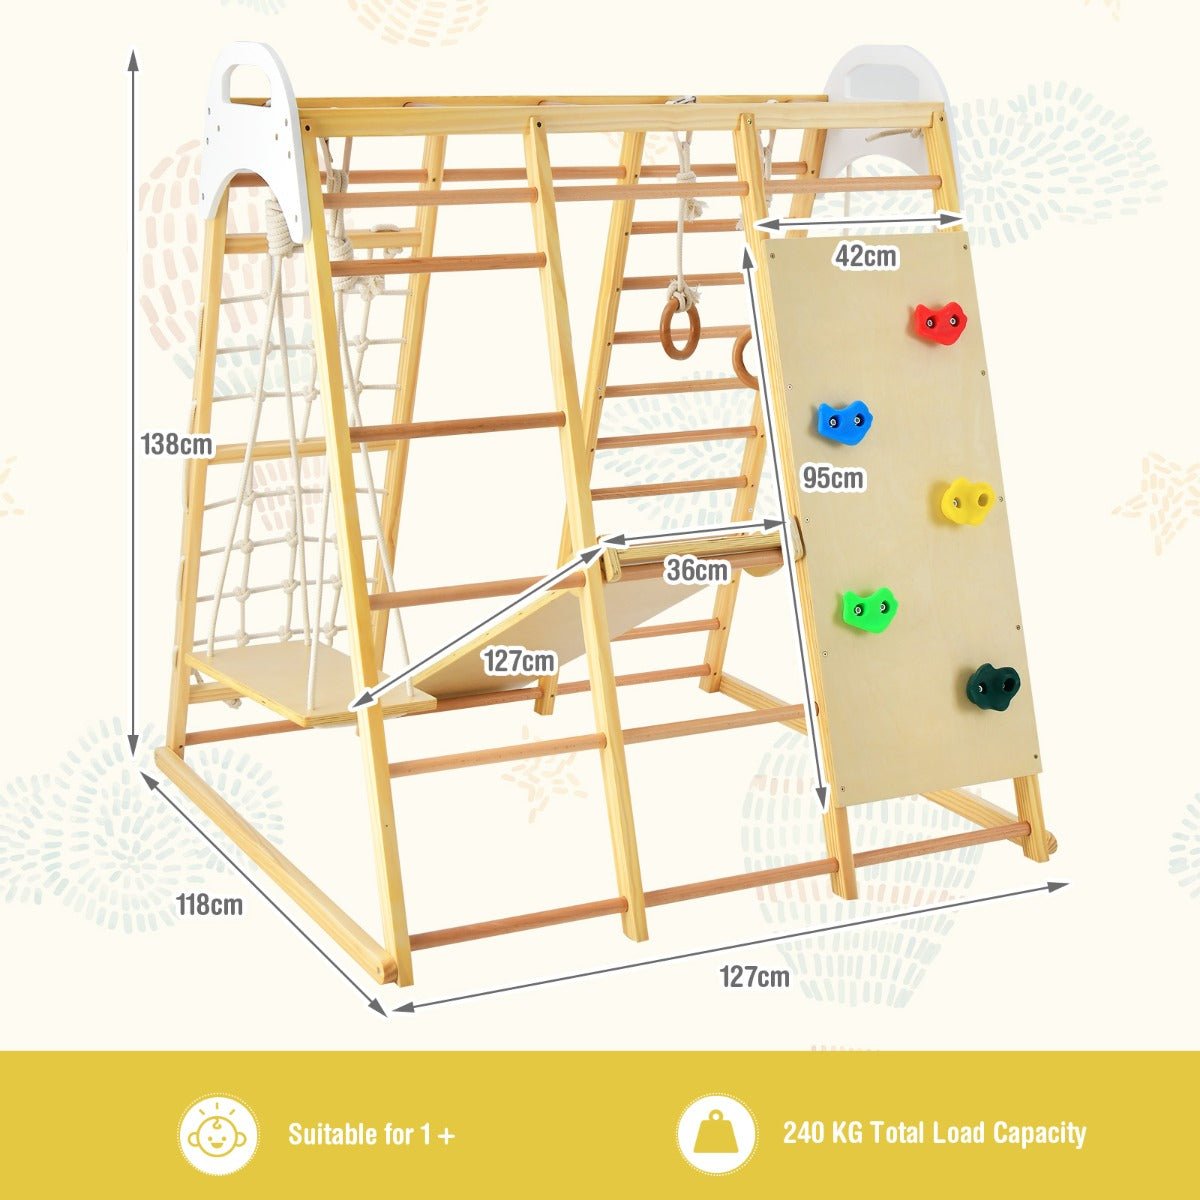 Multi-Activity Children's Playset - Swing, Slide & Climbing